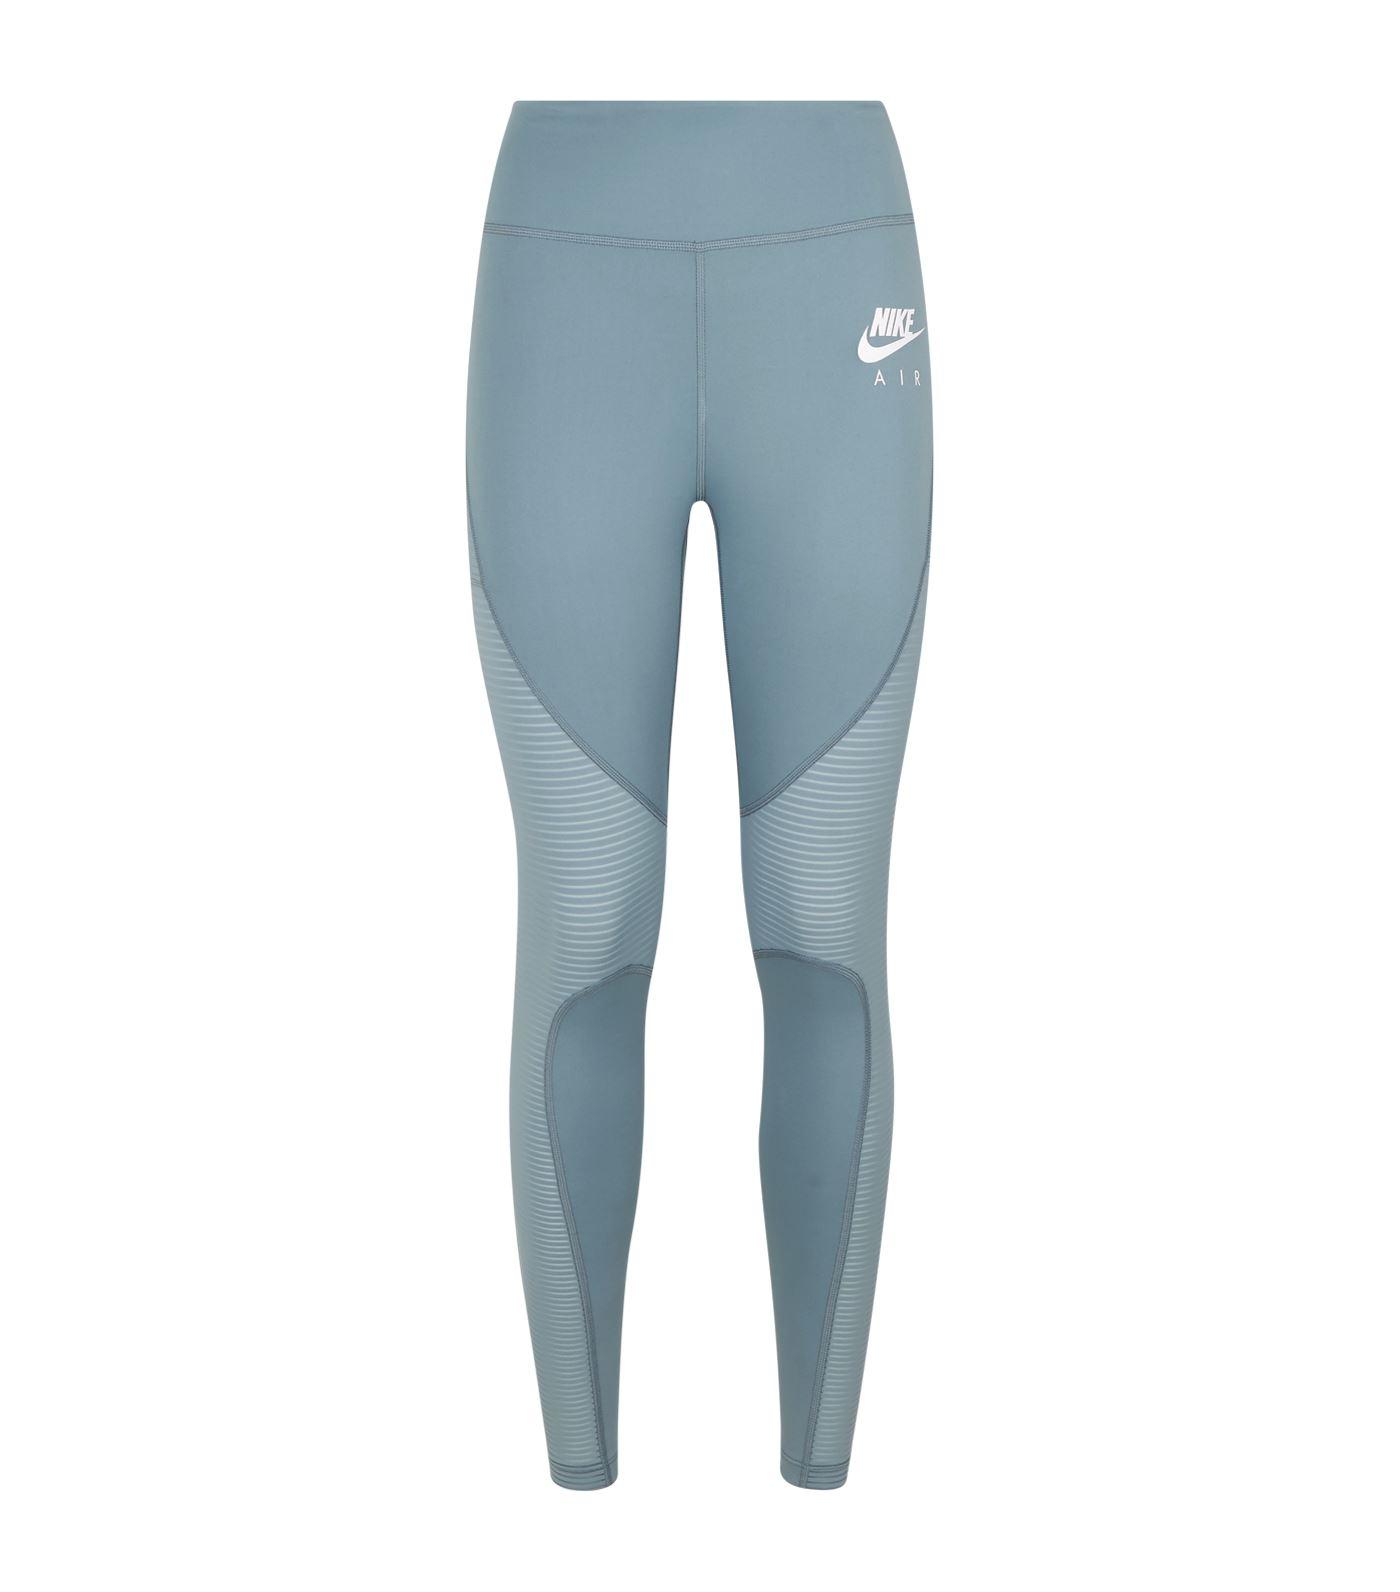 Nike Air Running Leggings in Grey (Gray) - Lyst